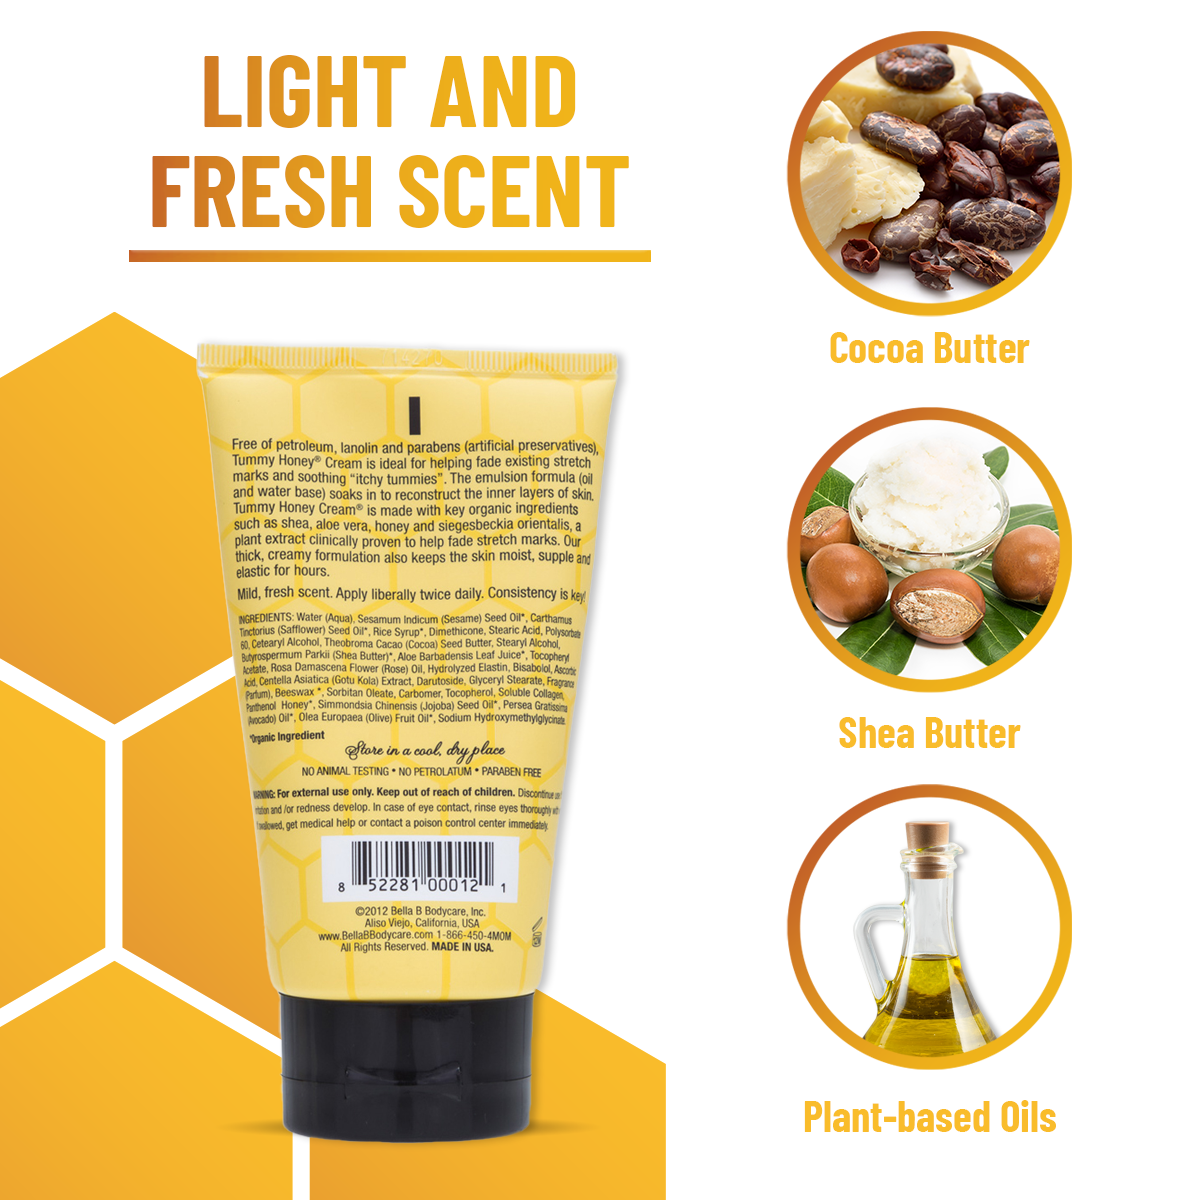 Bella B Gift Set - Tummy Honey Butter 4oz and Tummy Honey Cream 4oz and Organic Olive Oil Skin Therapy 4.5oz